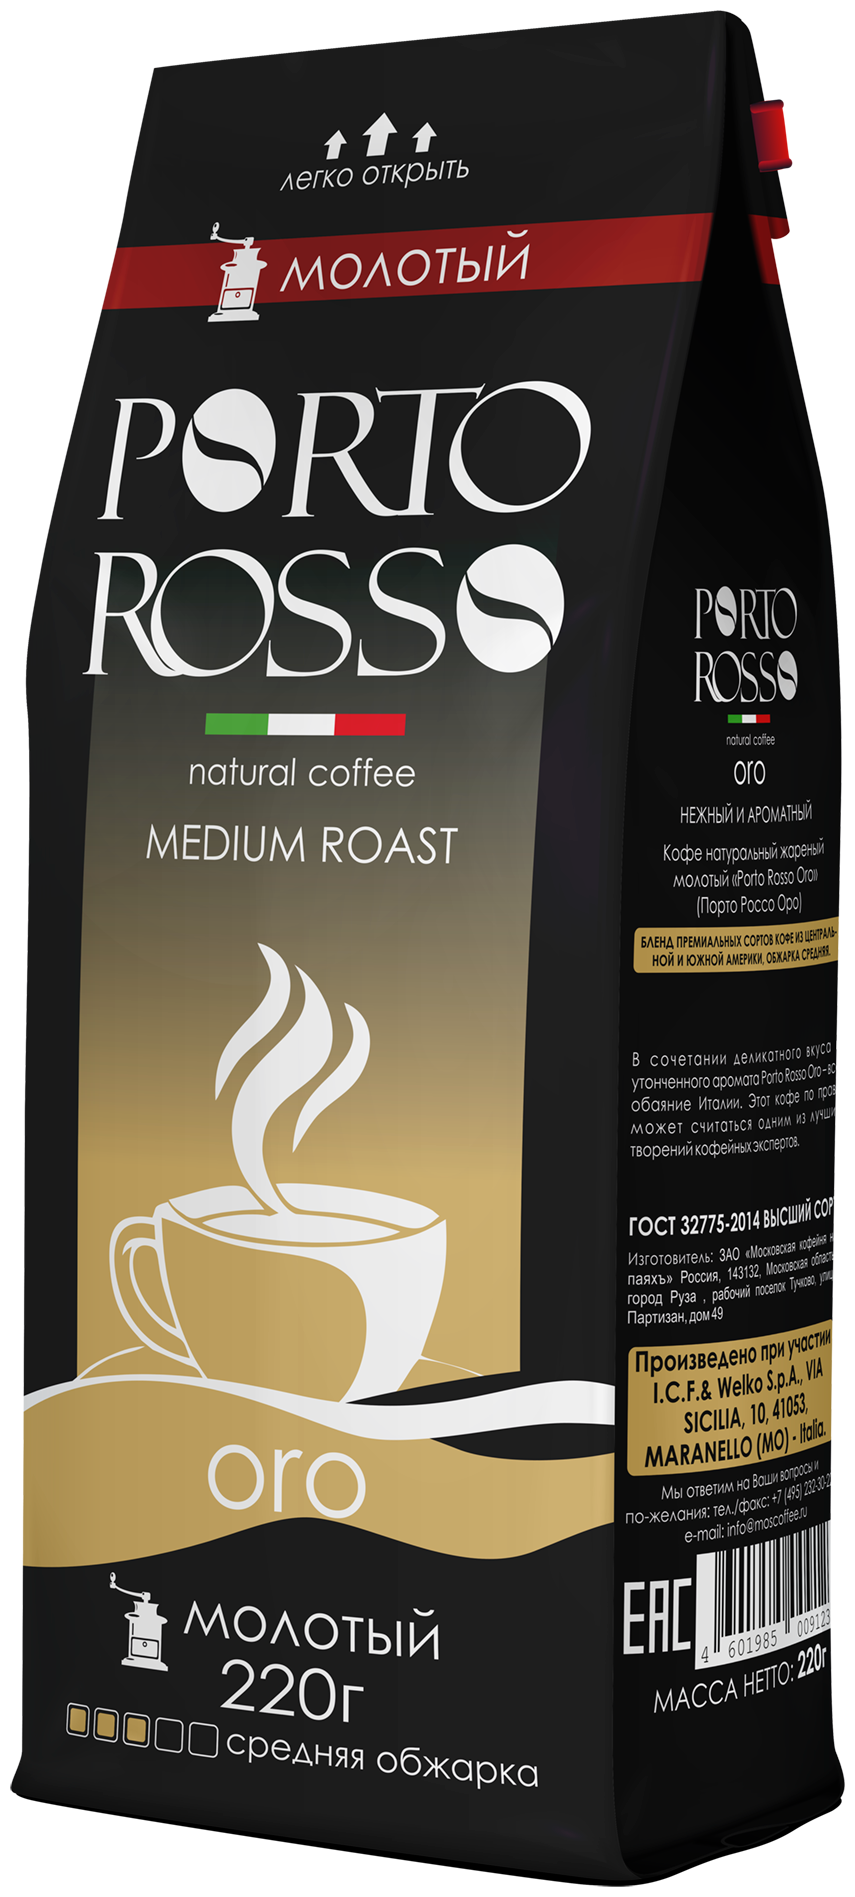 Кофе молотый Porto Rosso oro 220 г